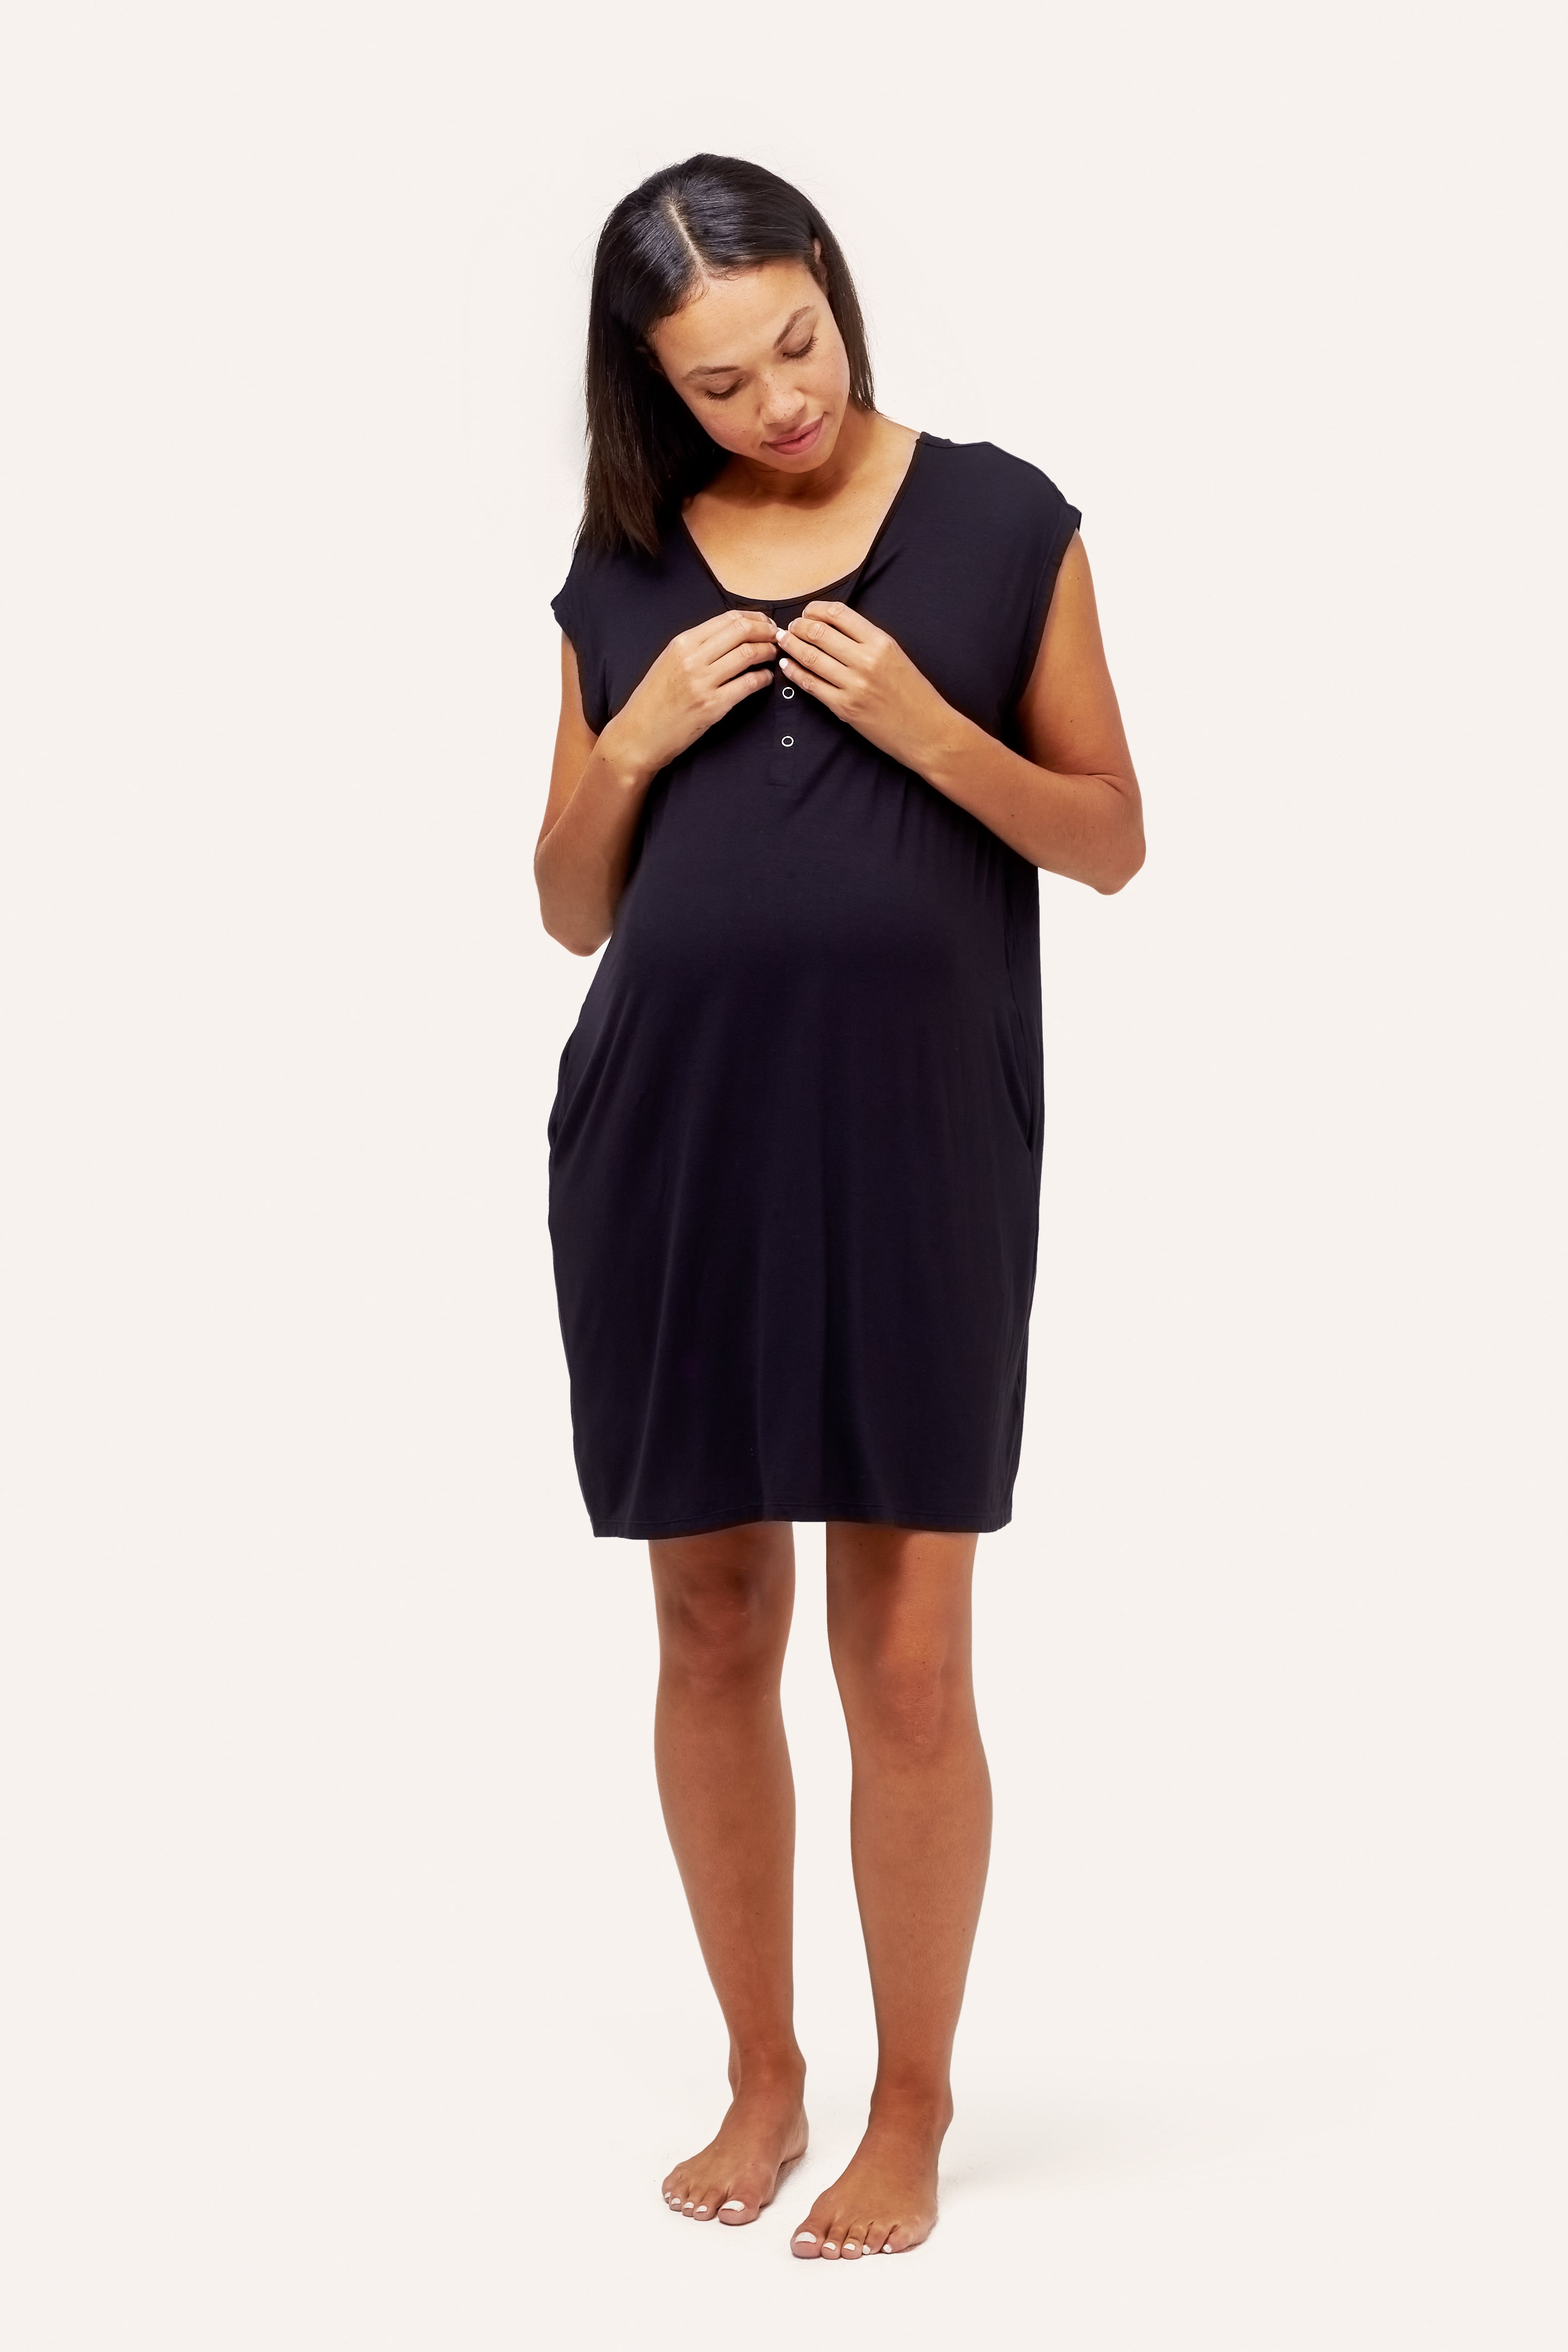 Maternity pregnancy and nursing robe Flamingo, Doctor Nap, Chalatai, Maternity nightwear